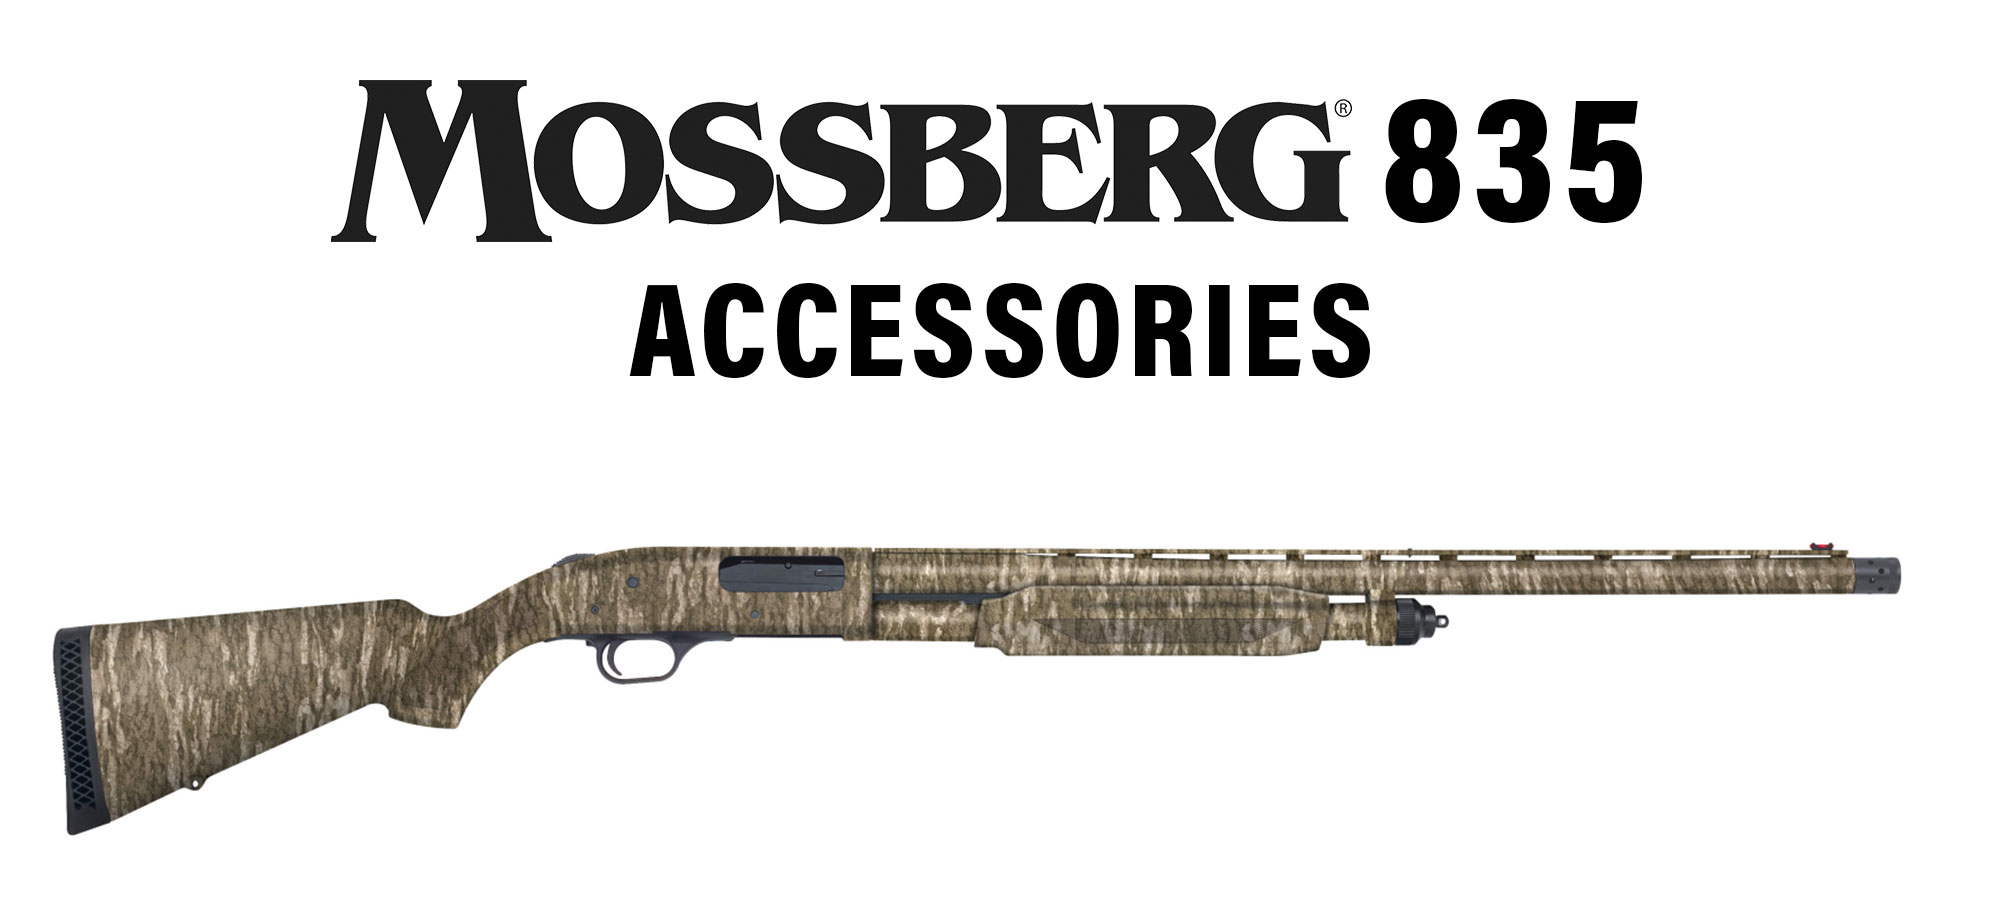 Mossberg 500 Accessories